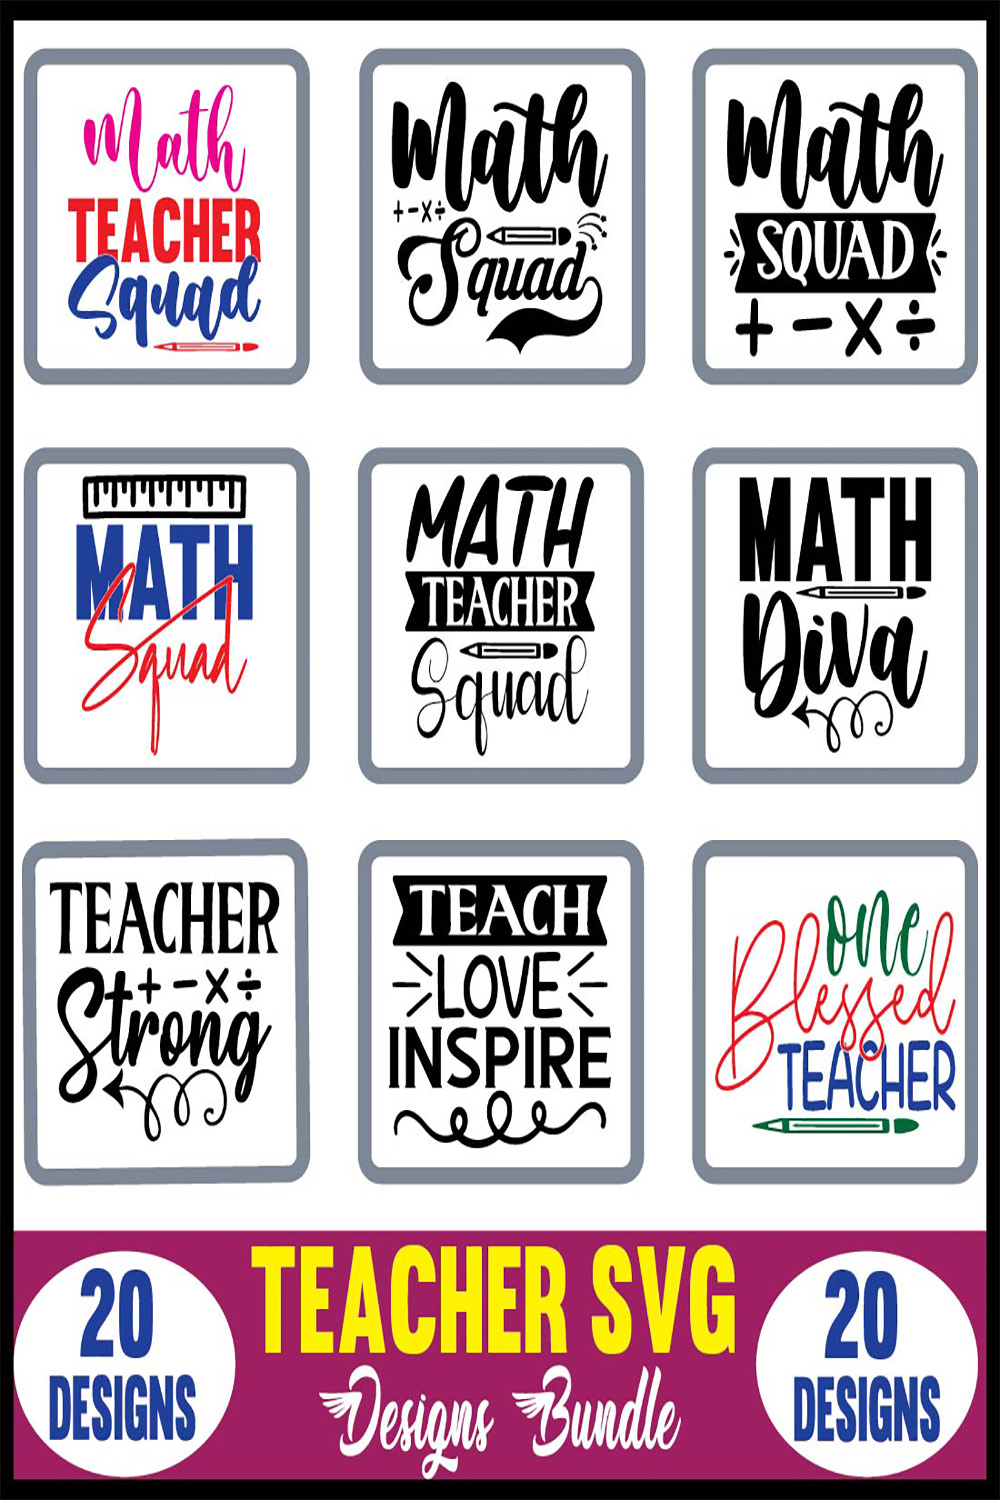 Teacher SVG Designs Bundle pinterest image.